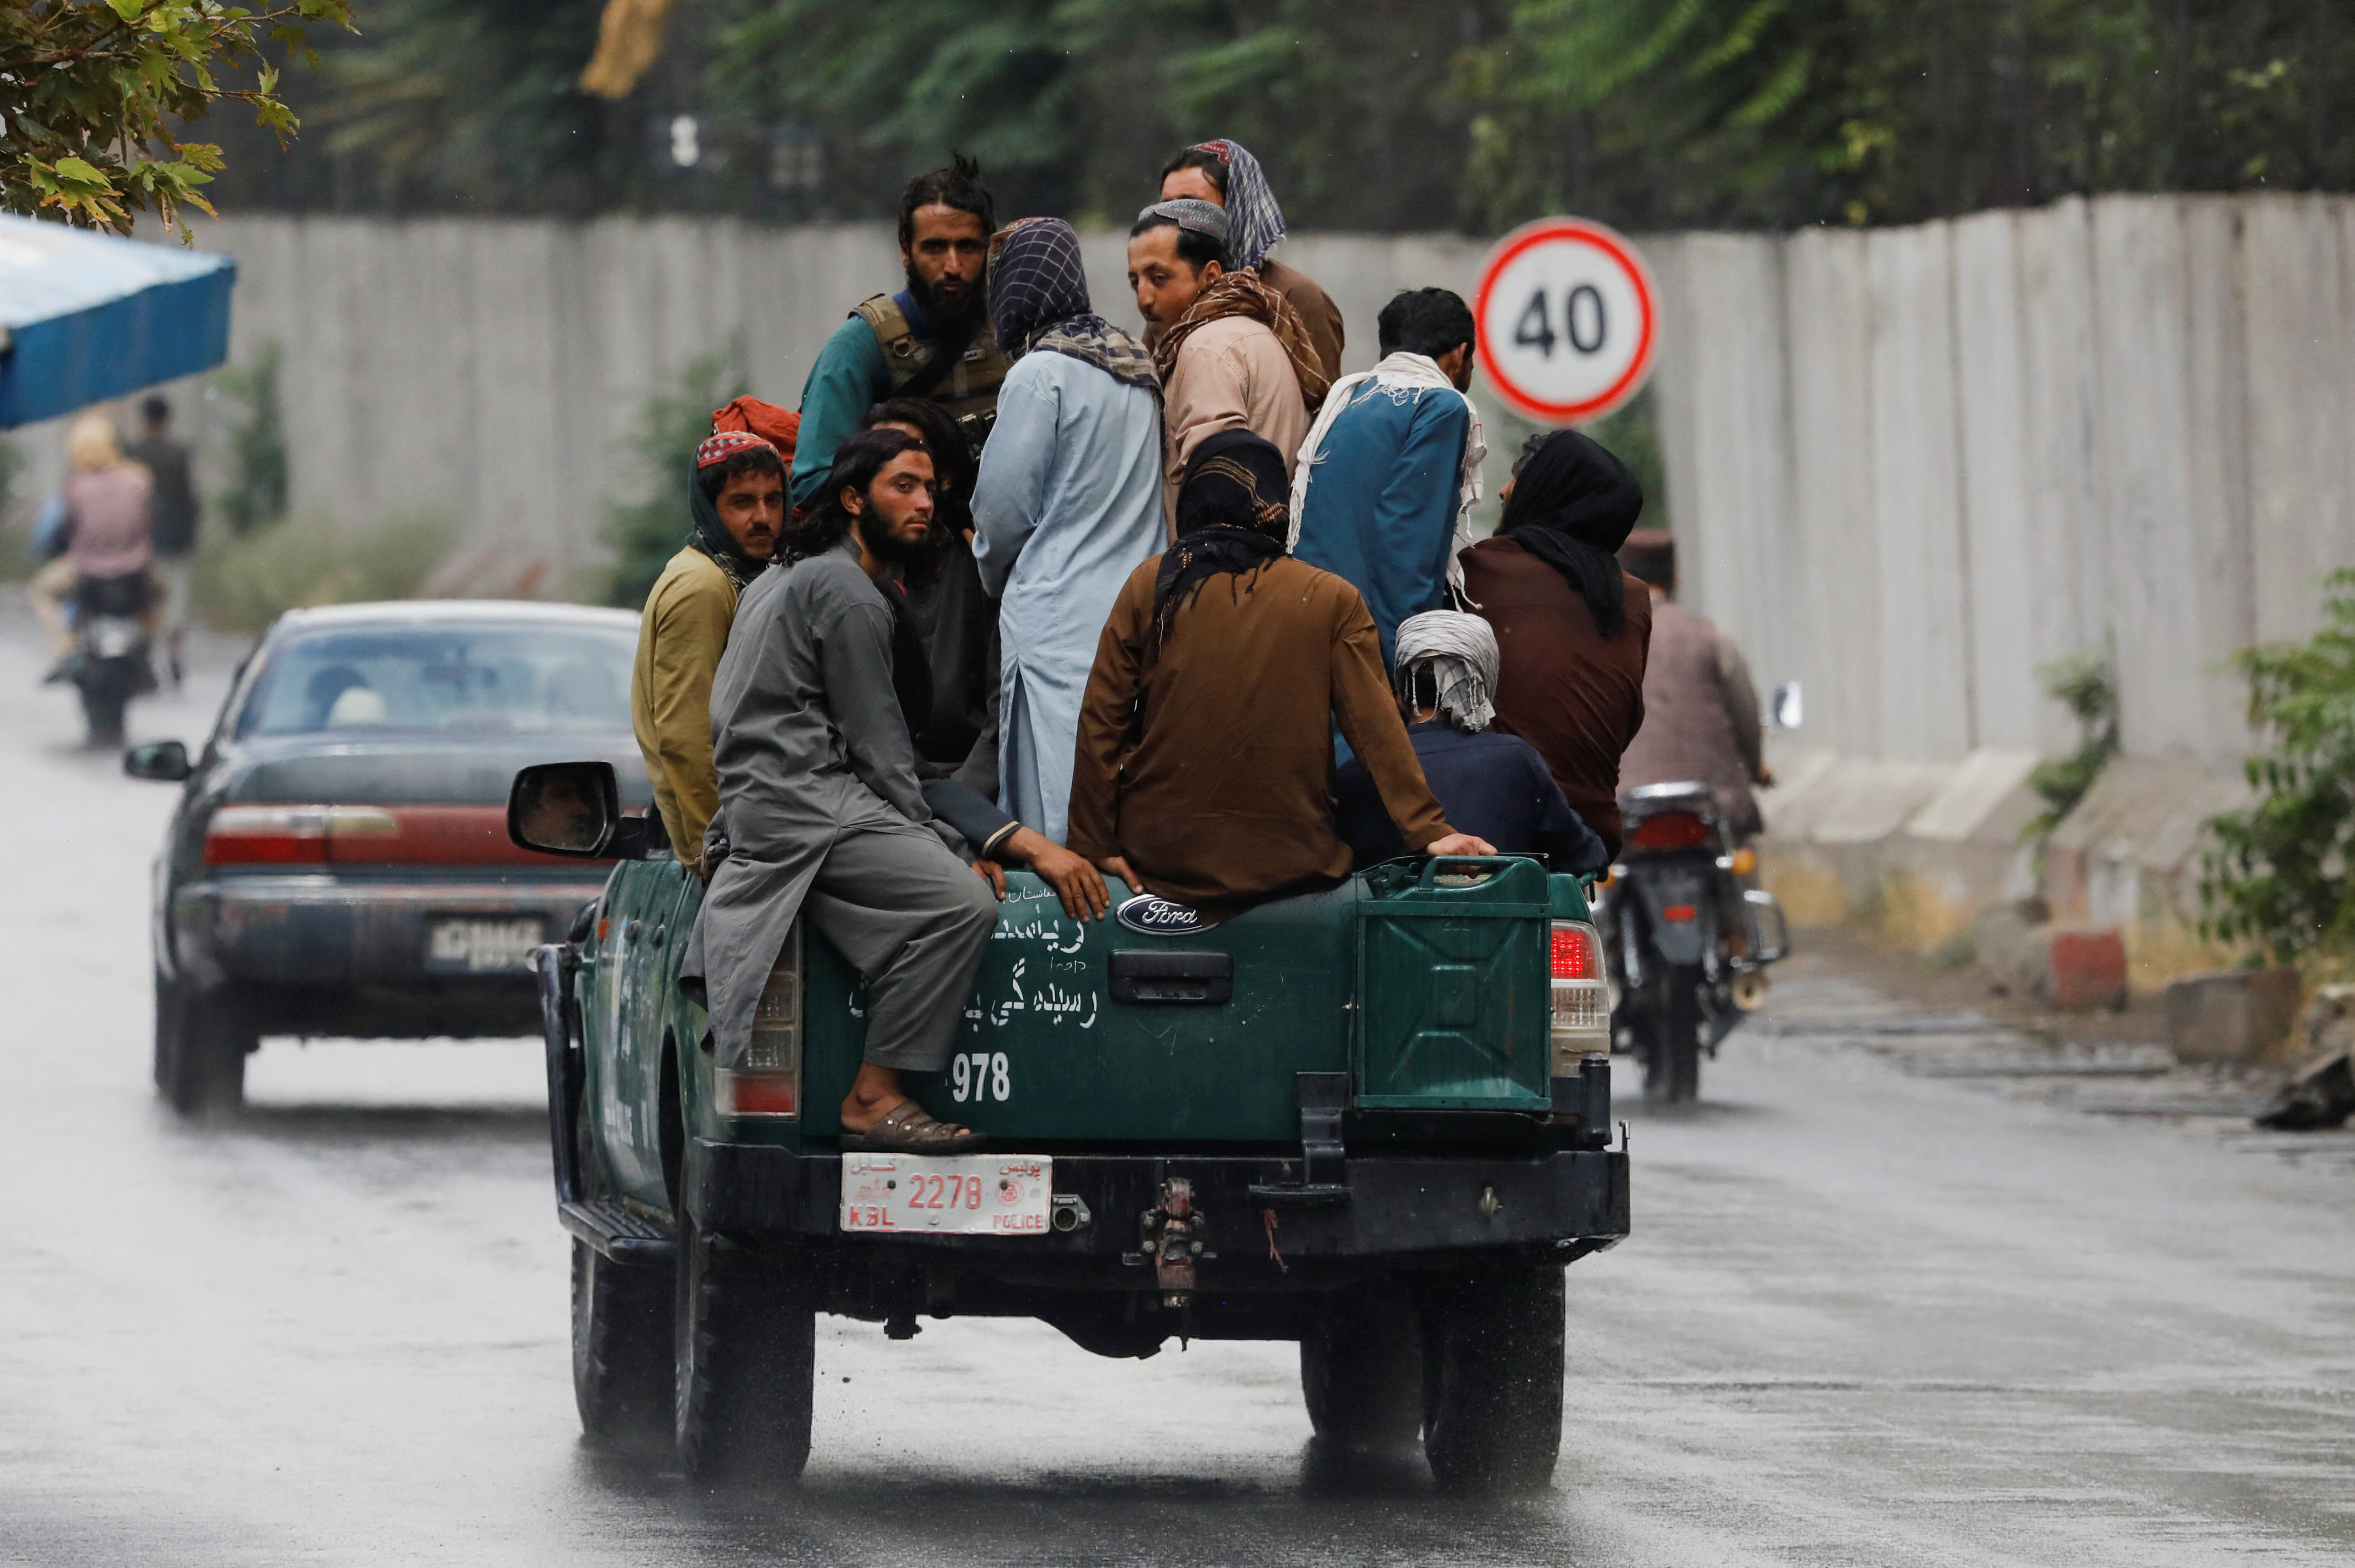 Taliban fighters drive a car on a street following the killing of Al Qaeda leader Ayman al-Zawahiri in a U.S. strike over the weekend, in Kabul